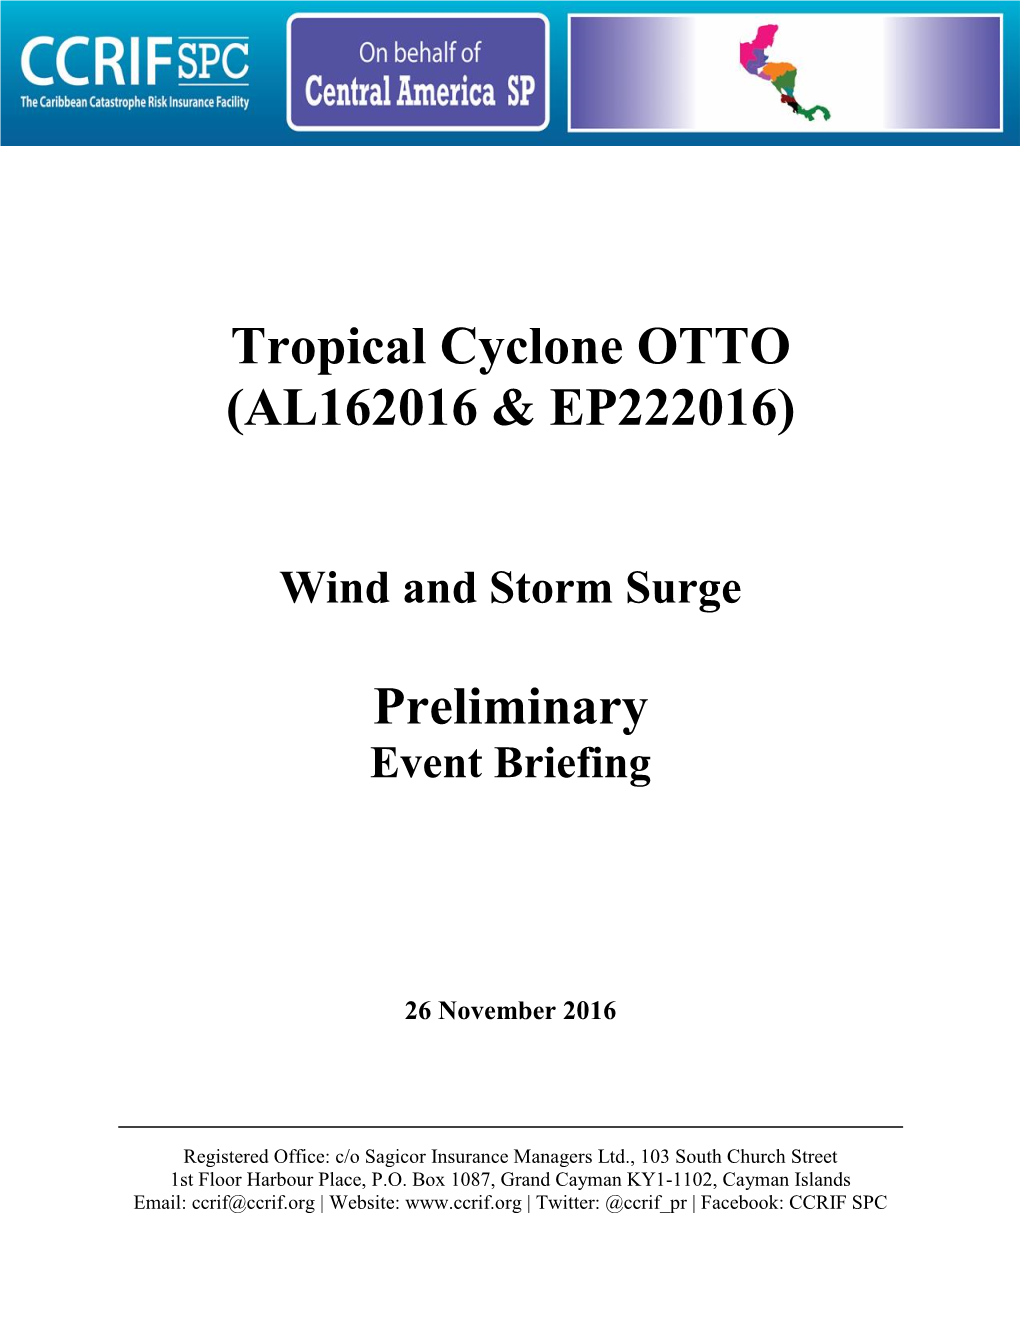 Tropical Cyclone OTTO (AL162016 & EP222016)